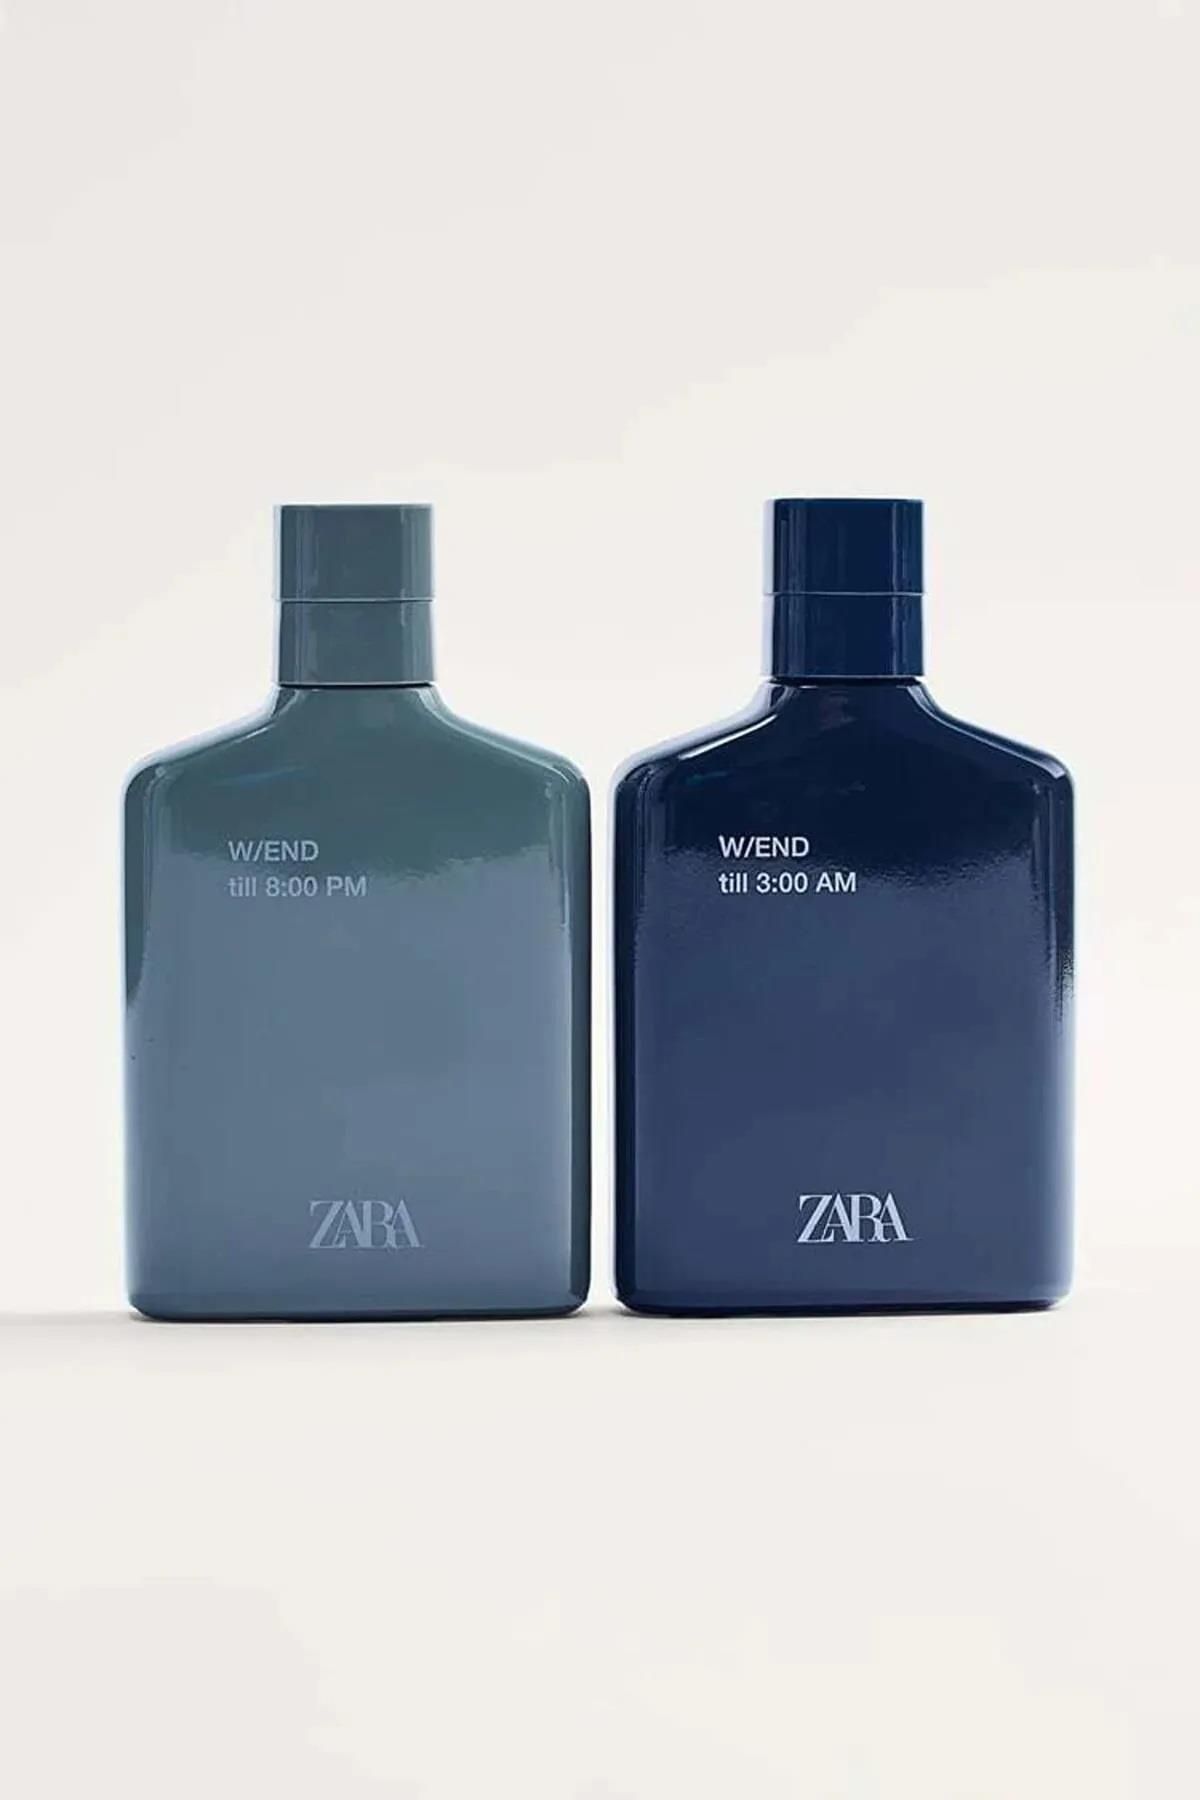 Zara W/end Tıll 8:00 Pm W/end Tıll 3:00 Am Edt 100 ml 100 ml Erkek Parfüm